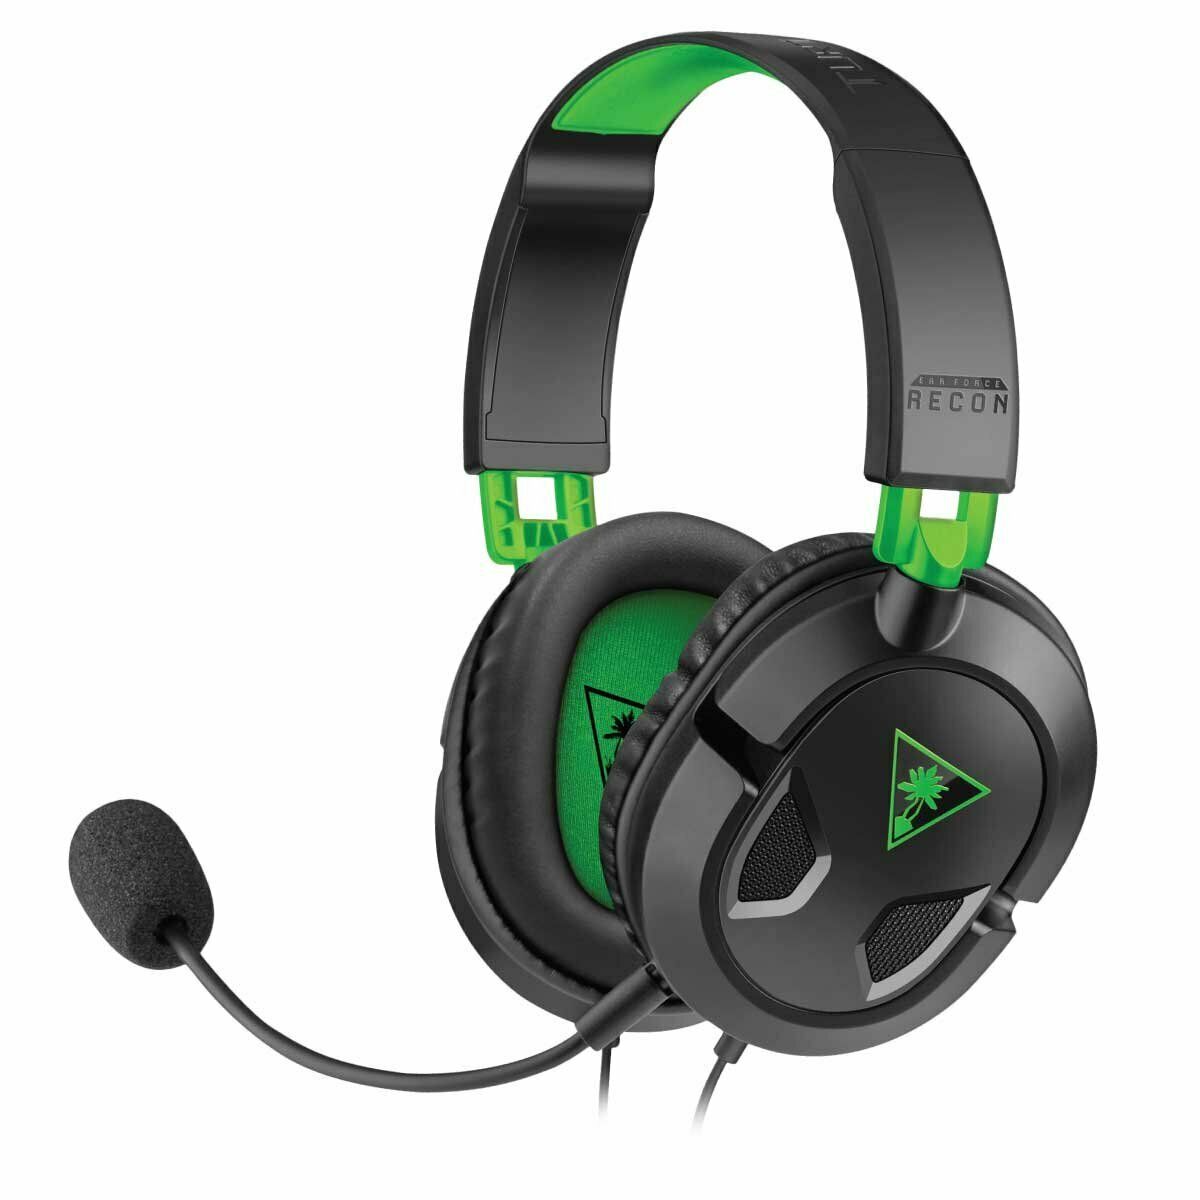 Turtle Beach Recon 50X Stereo Xbox Gaming Headset, Black & Green - Refurbished Pristine